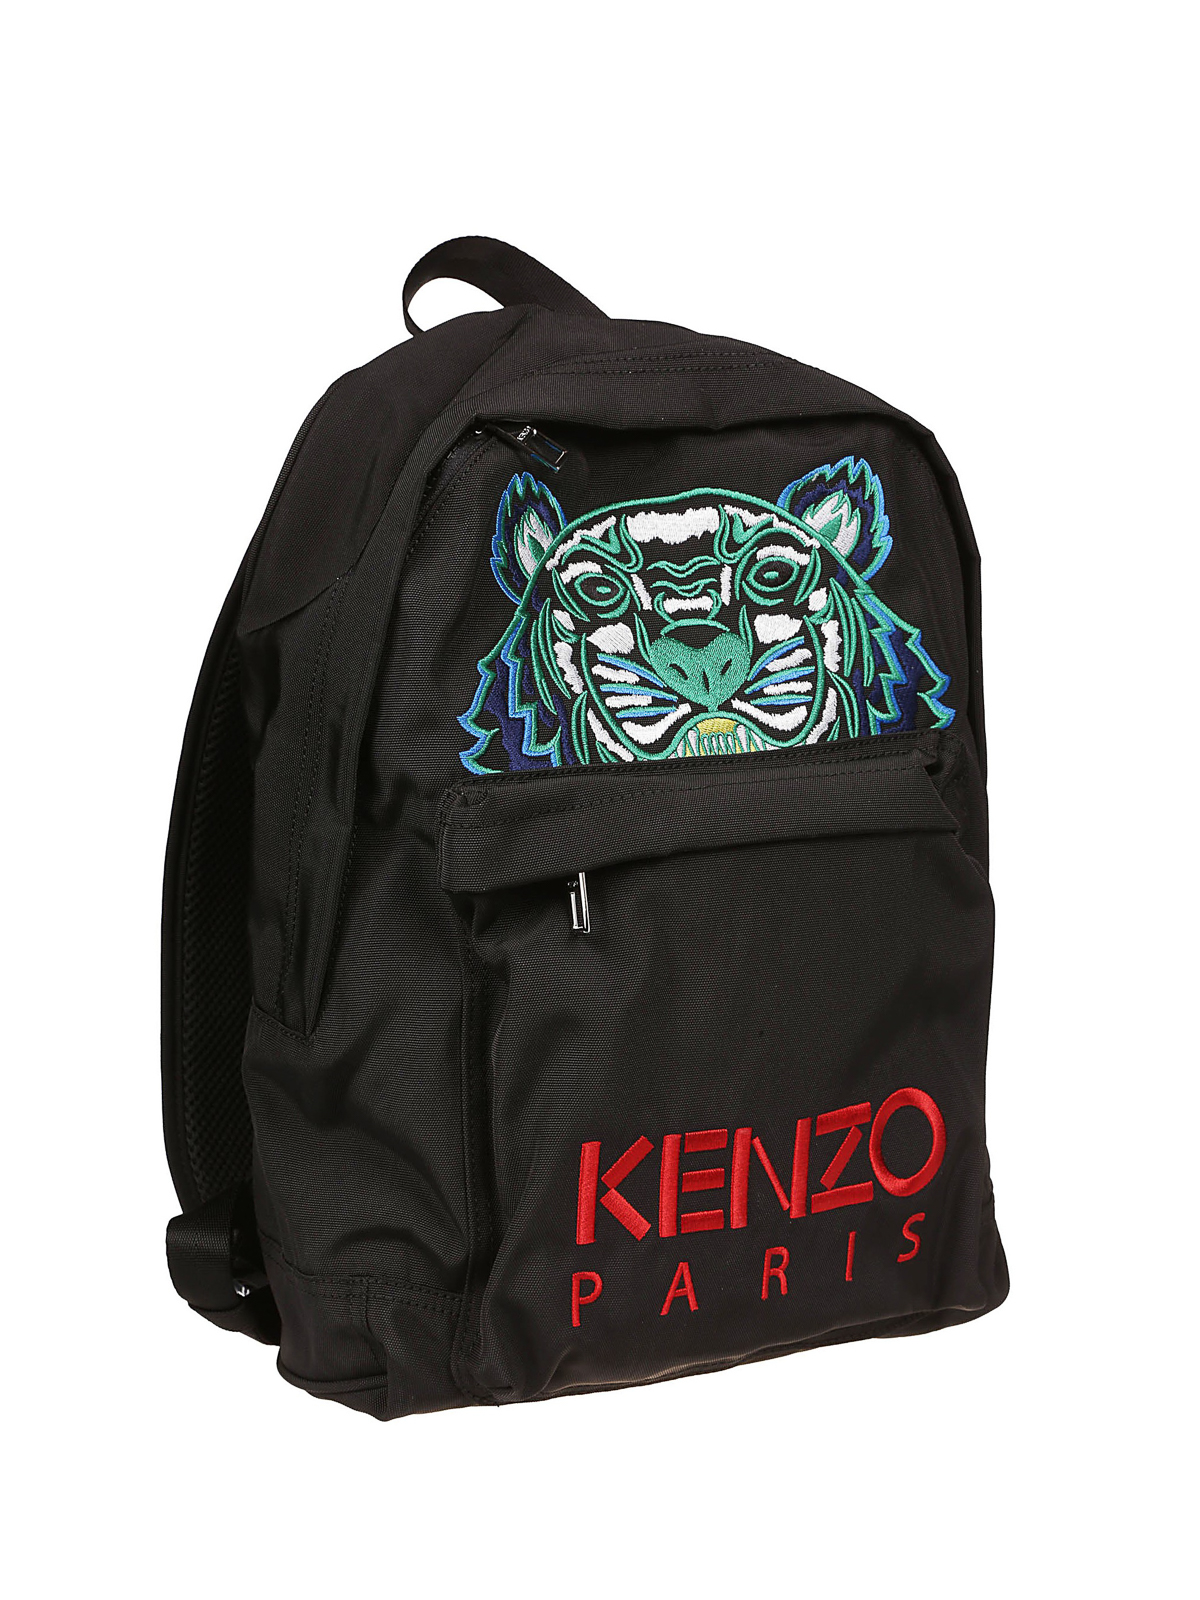 kenzo backpack